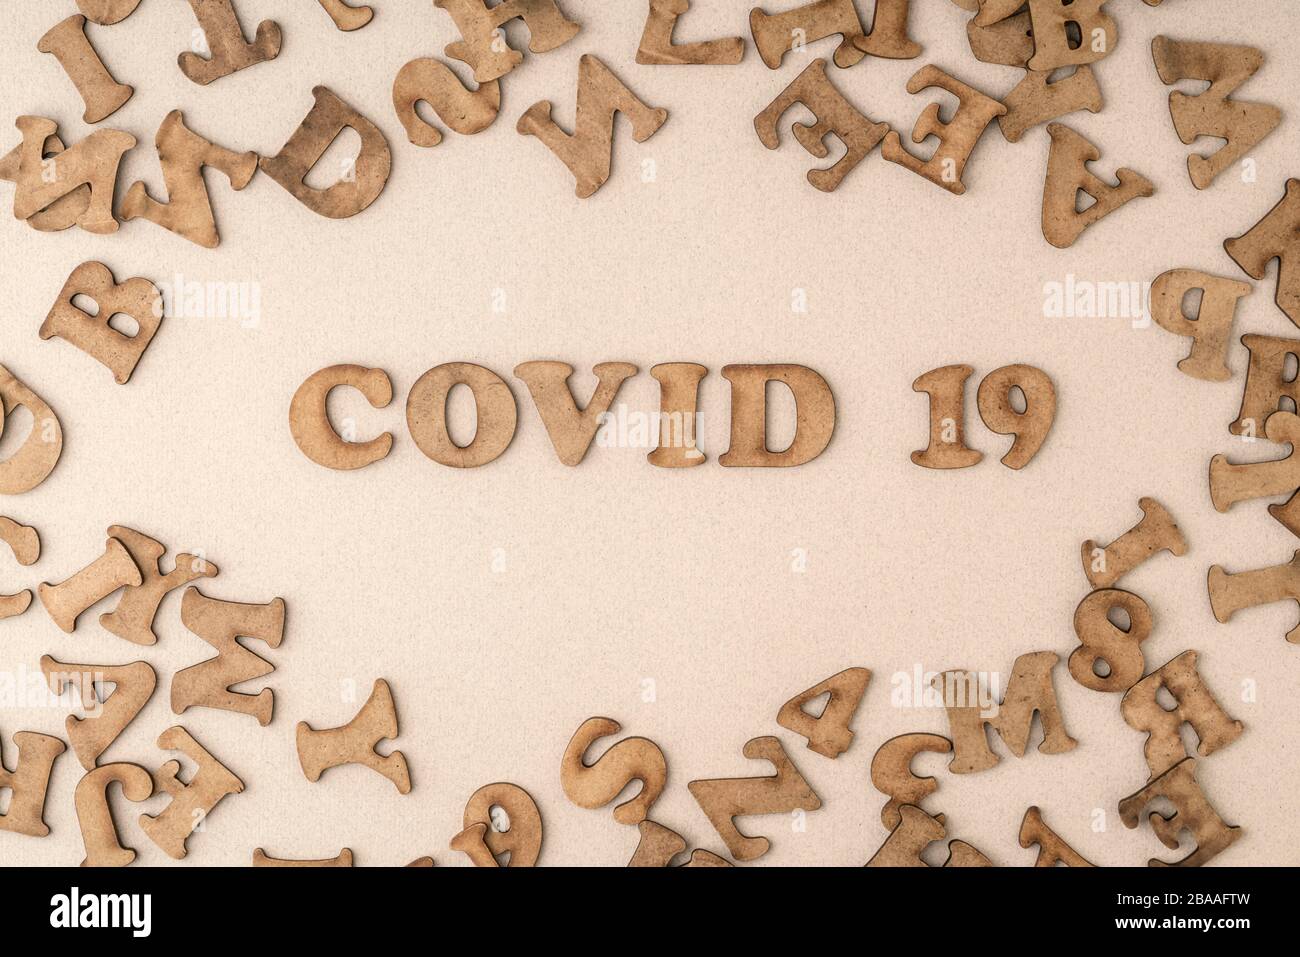 Epidemic Corona Virus Kovid-19 mit geschnitzten Holzbuchstaben geschrieben Stockfoto